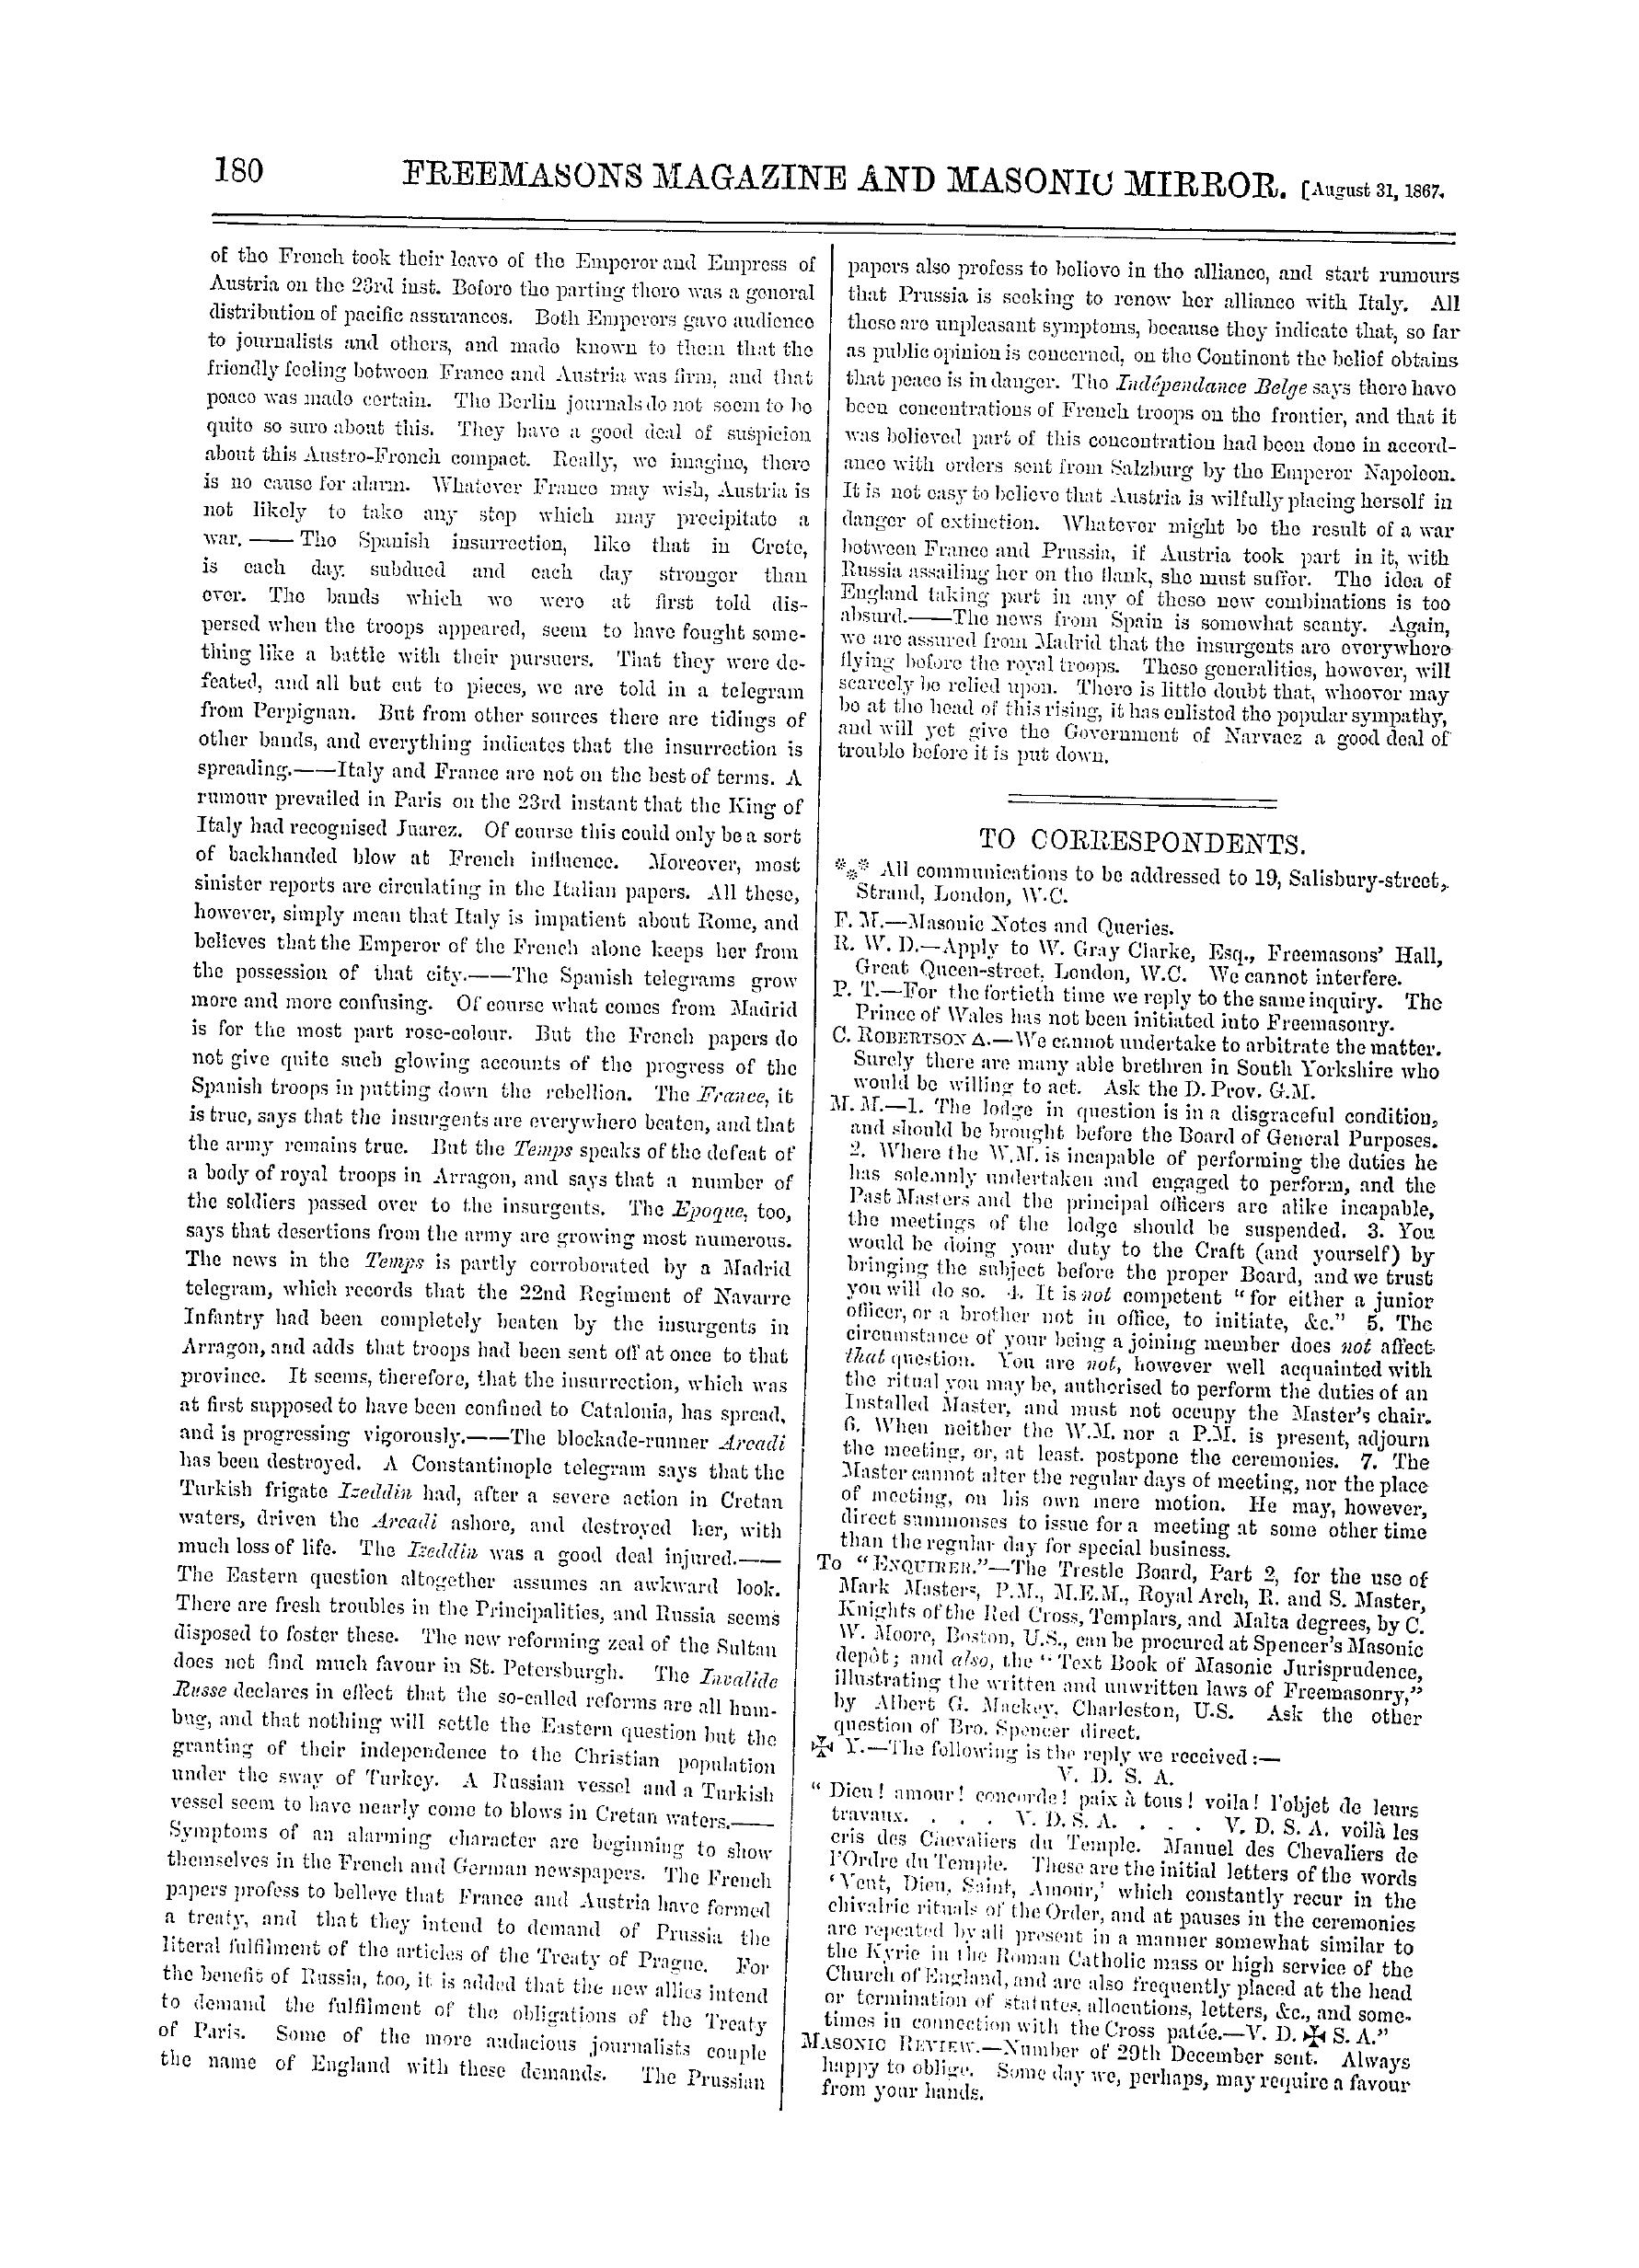 The Freemasons' Monthly Magazine: 1867-08-31 - The Week.